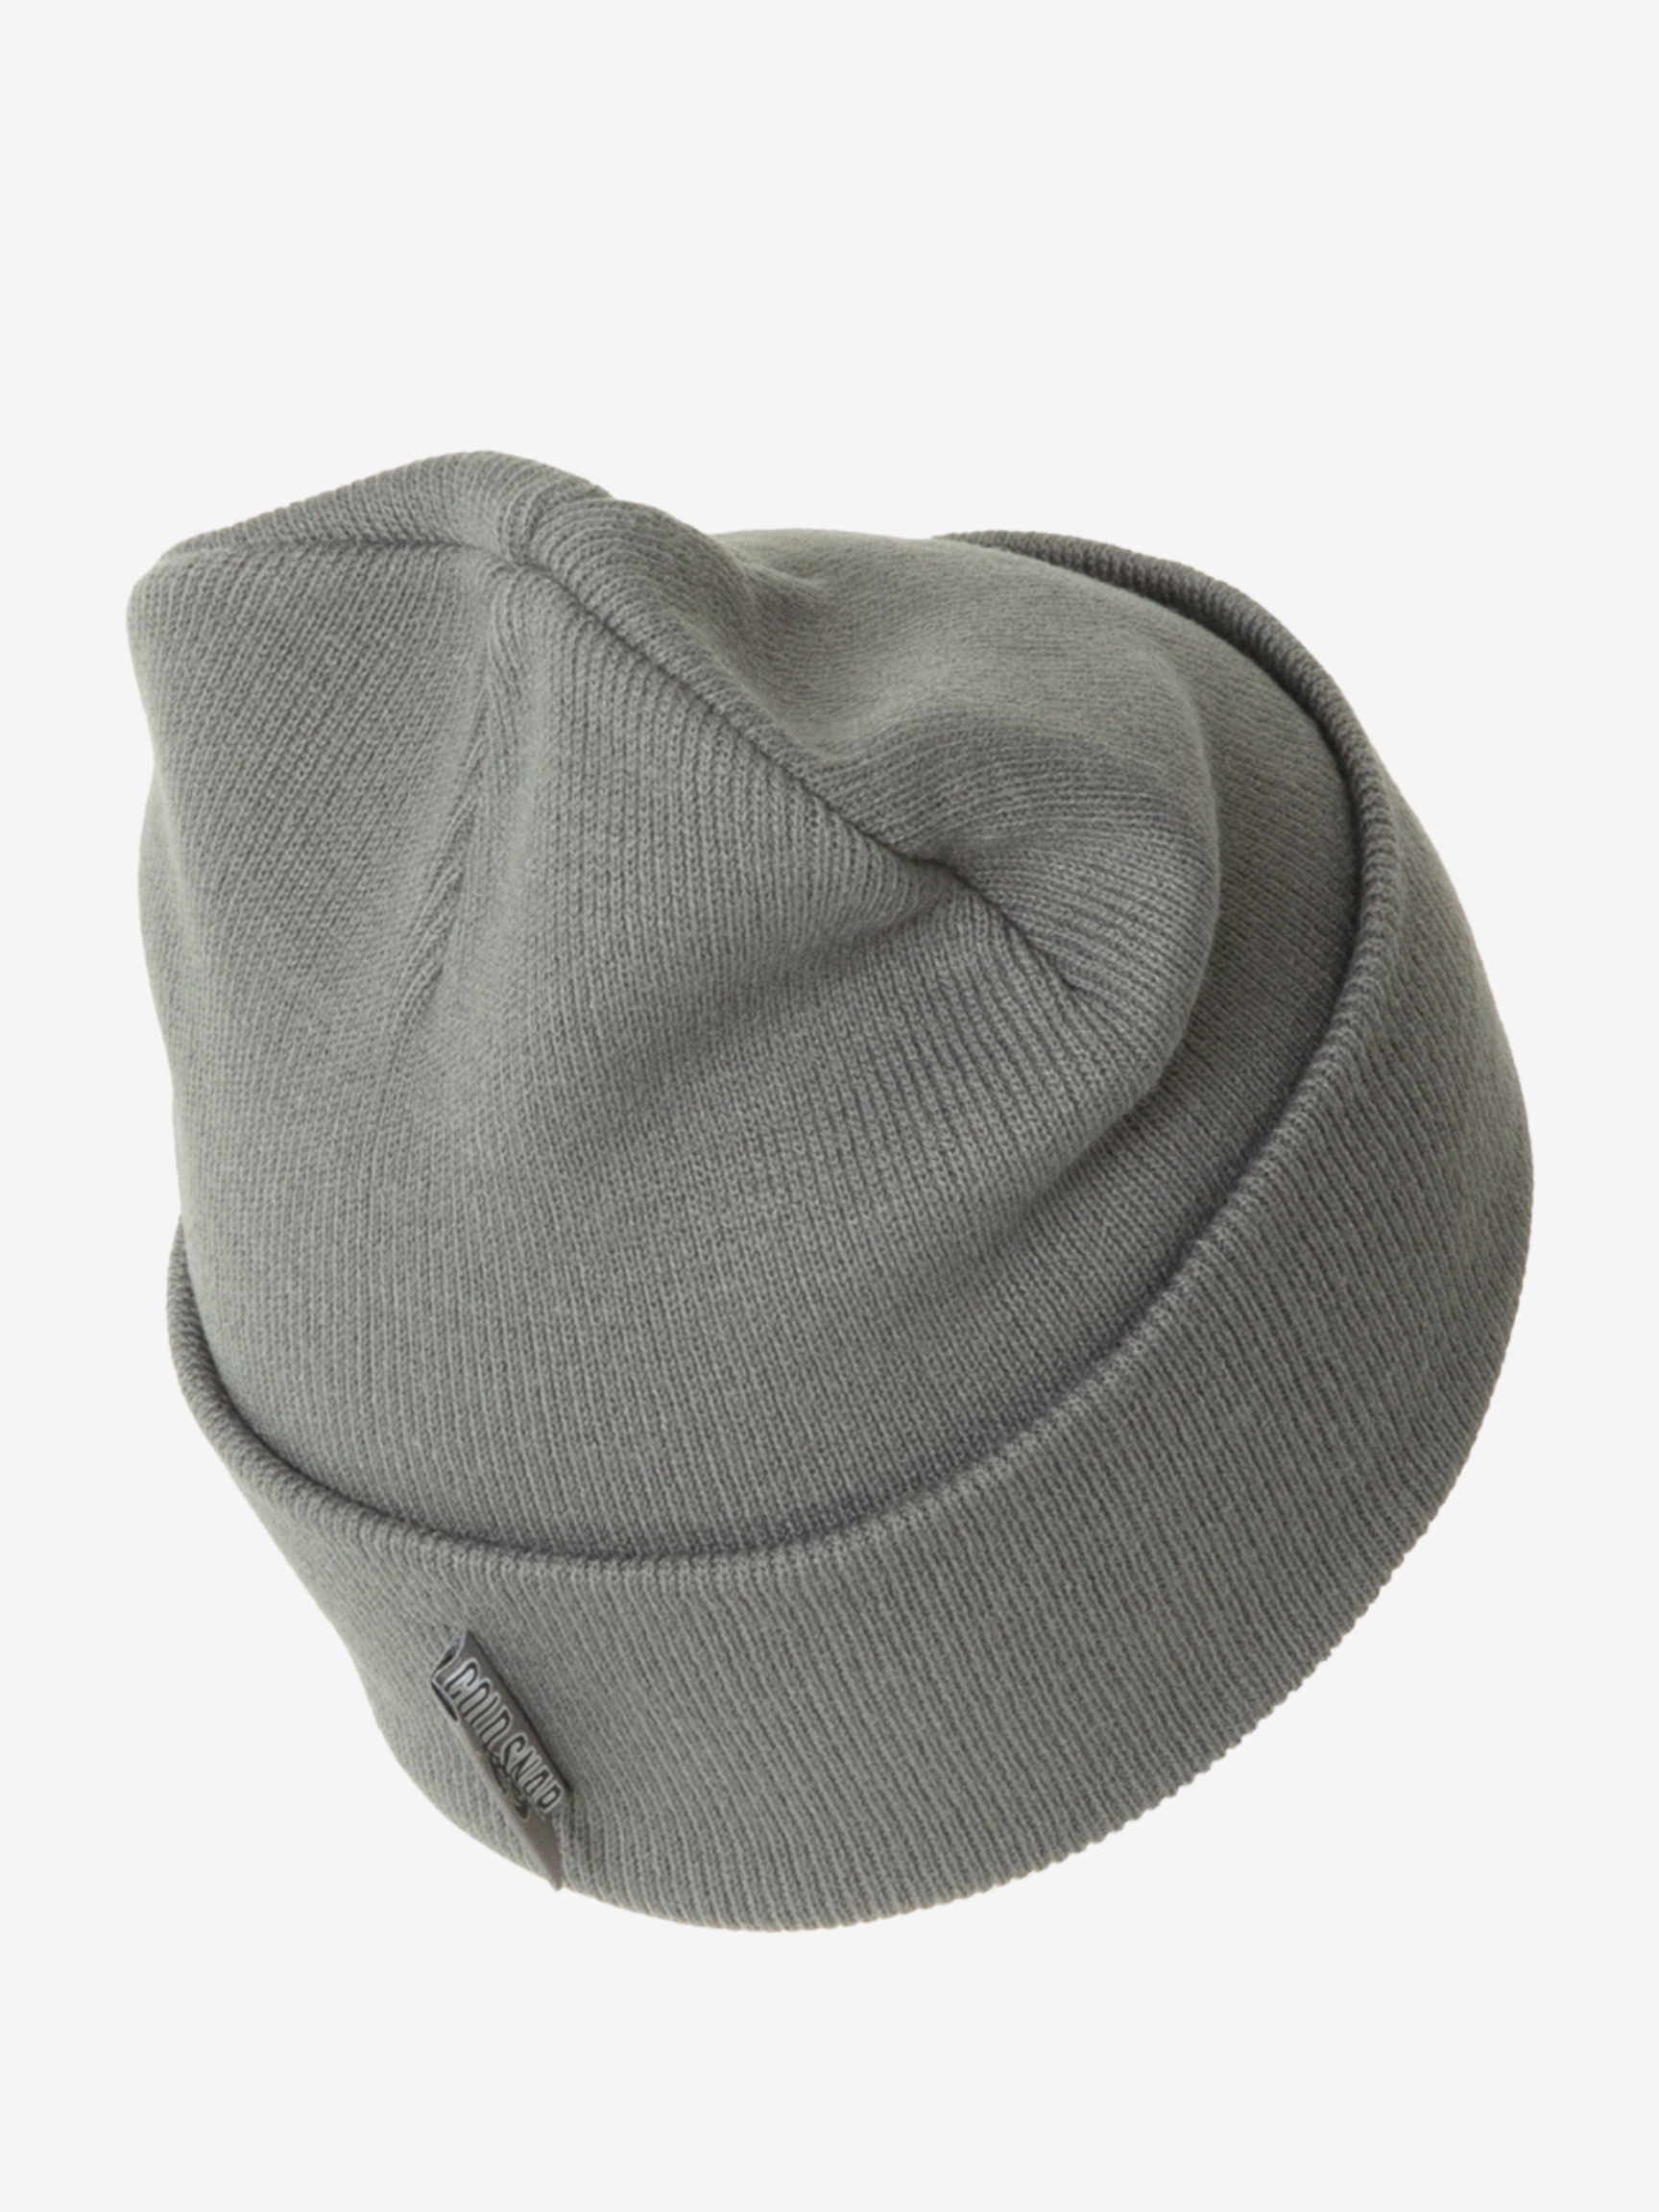 Stocking Cap- Gray